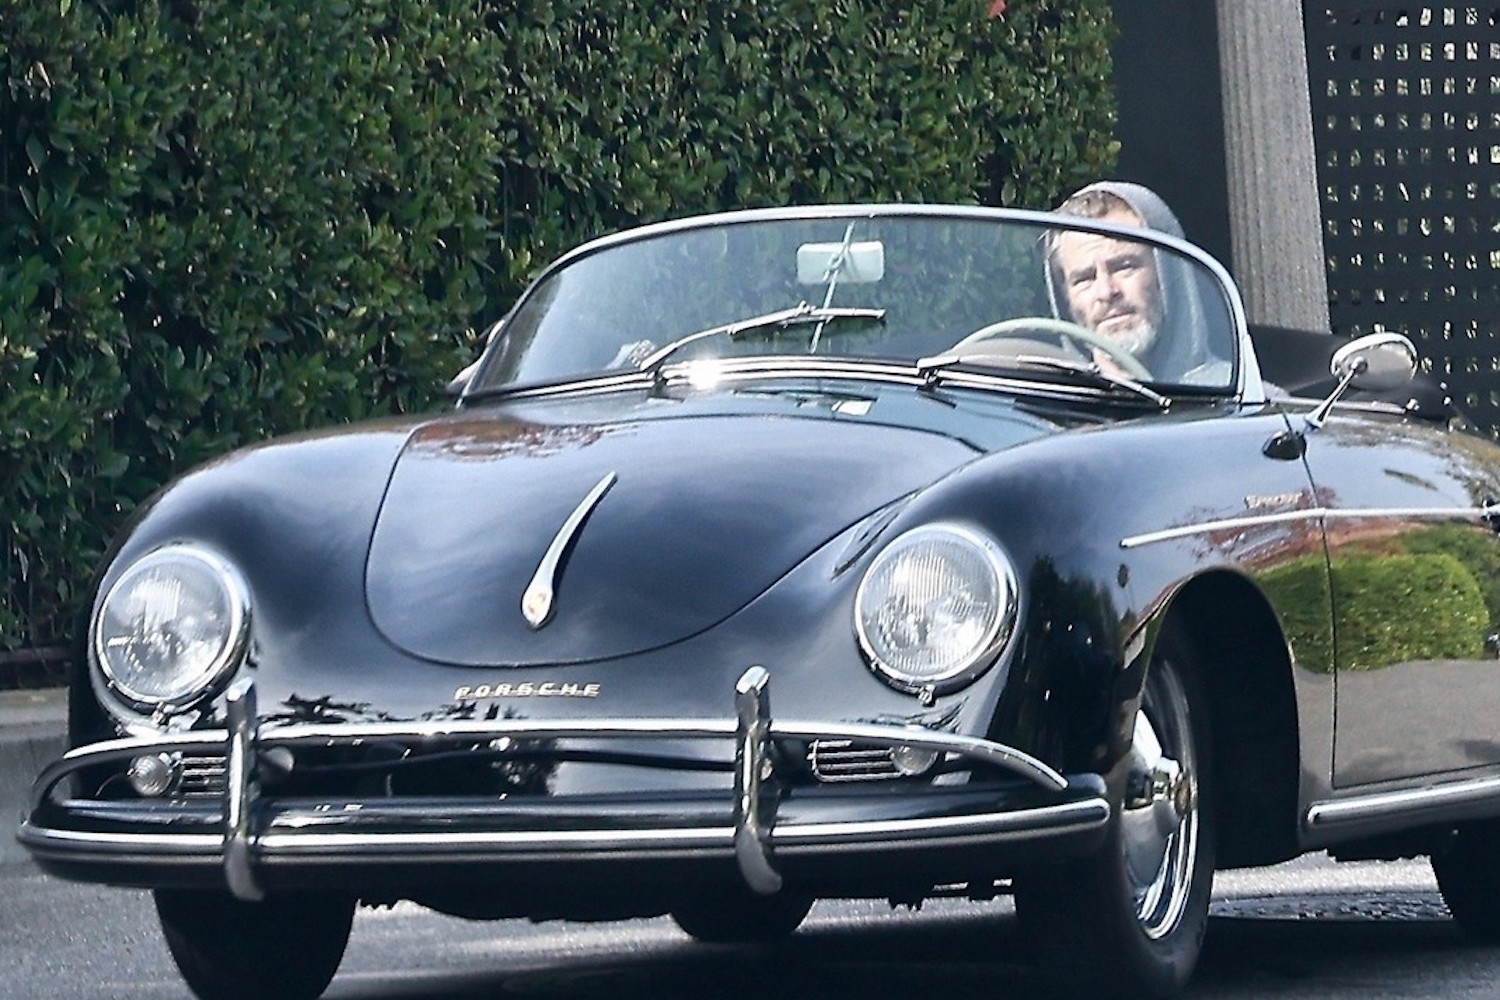 Chris Pine Makes Up For Bad Taste In Footwear With Rare Vintage Porsche